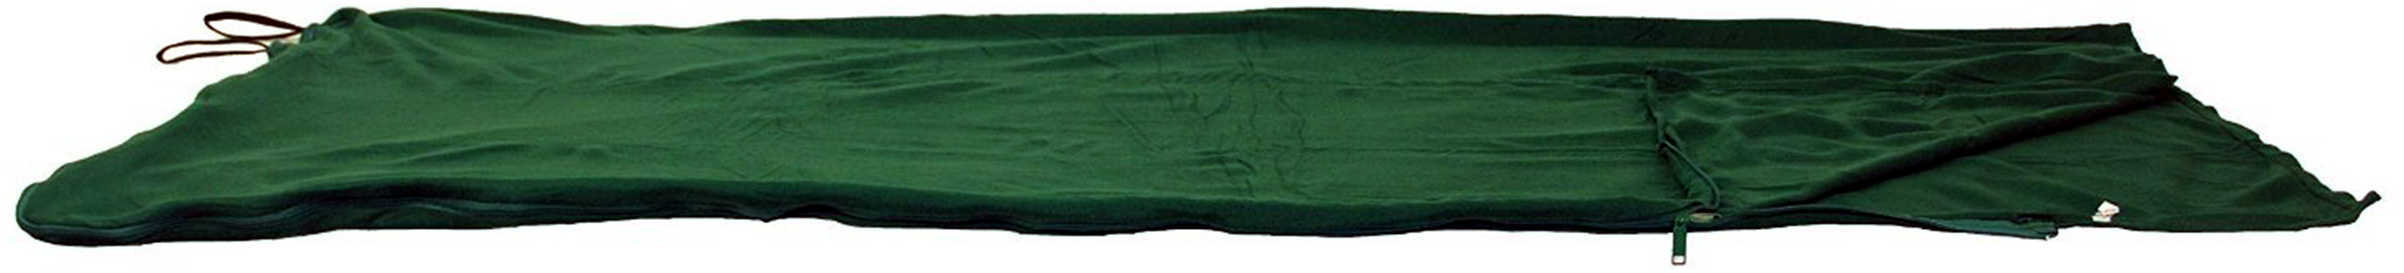 Tex Sport Fleece Sleeping Bag/ Liner, Green Md: 15201